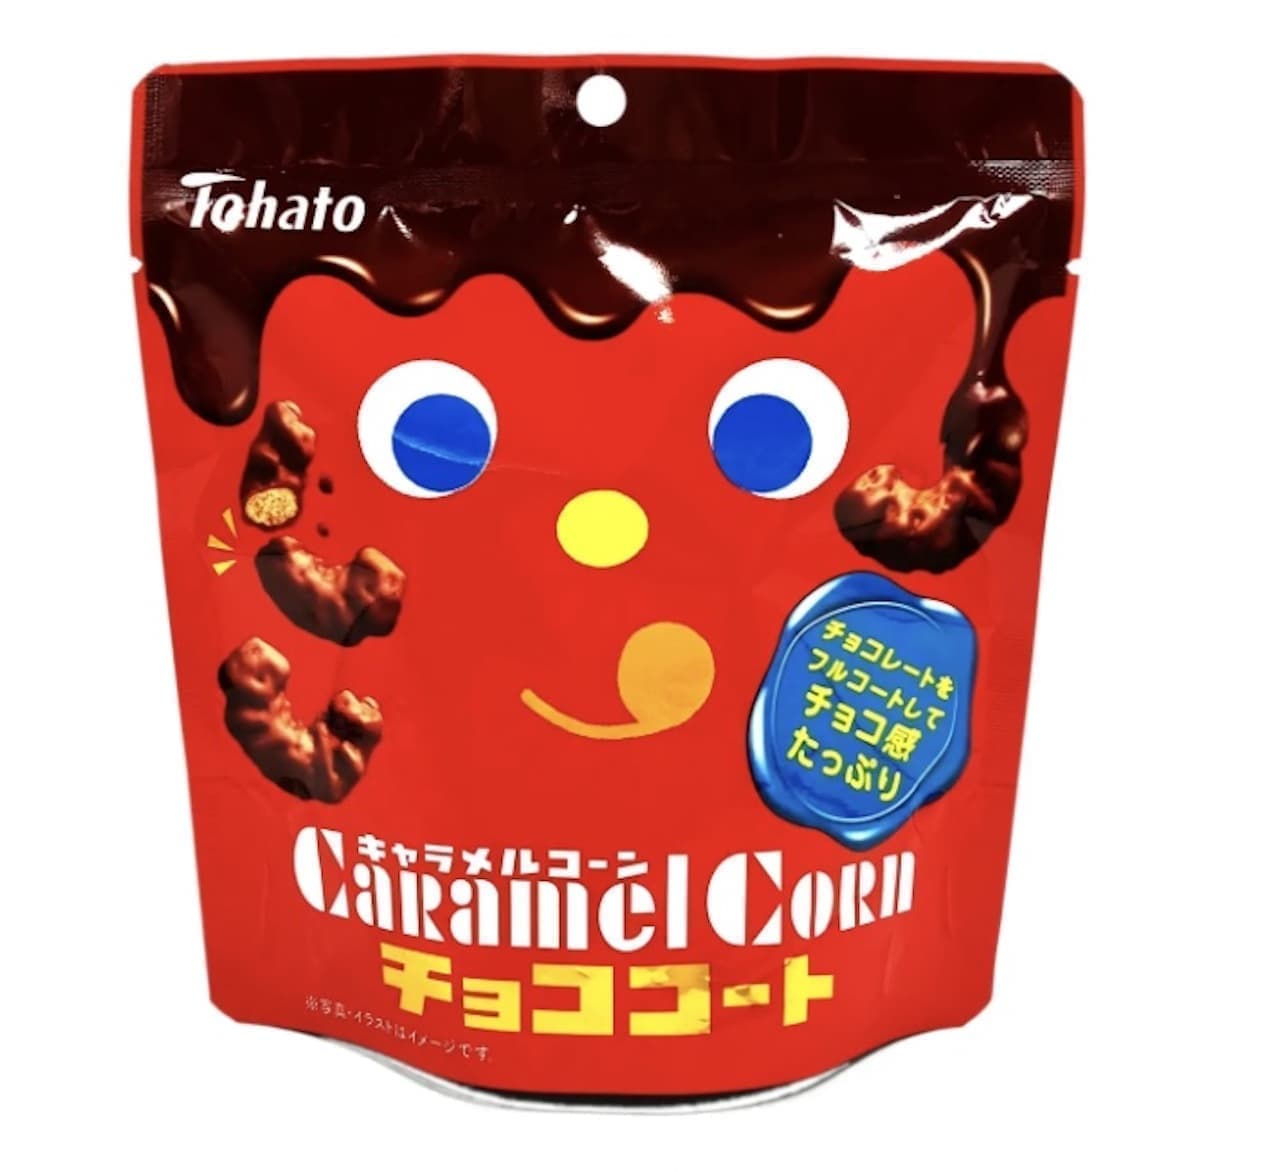 Caramel Corn, Chocolate Coated" from Cleeto